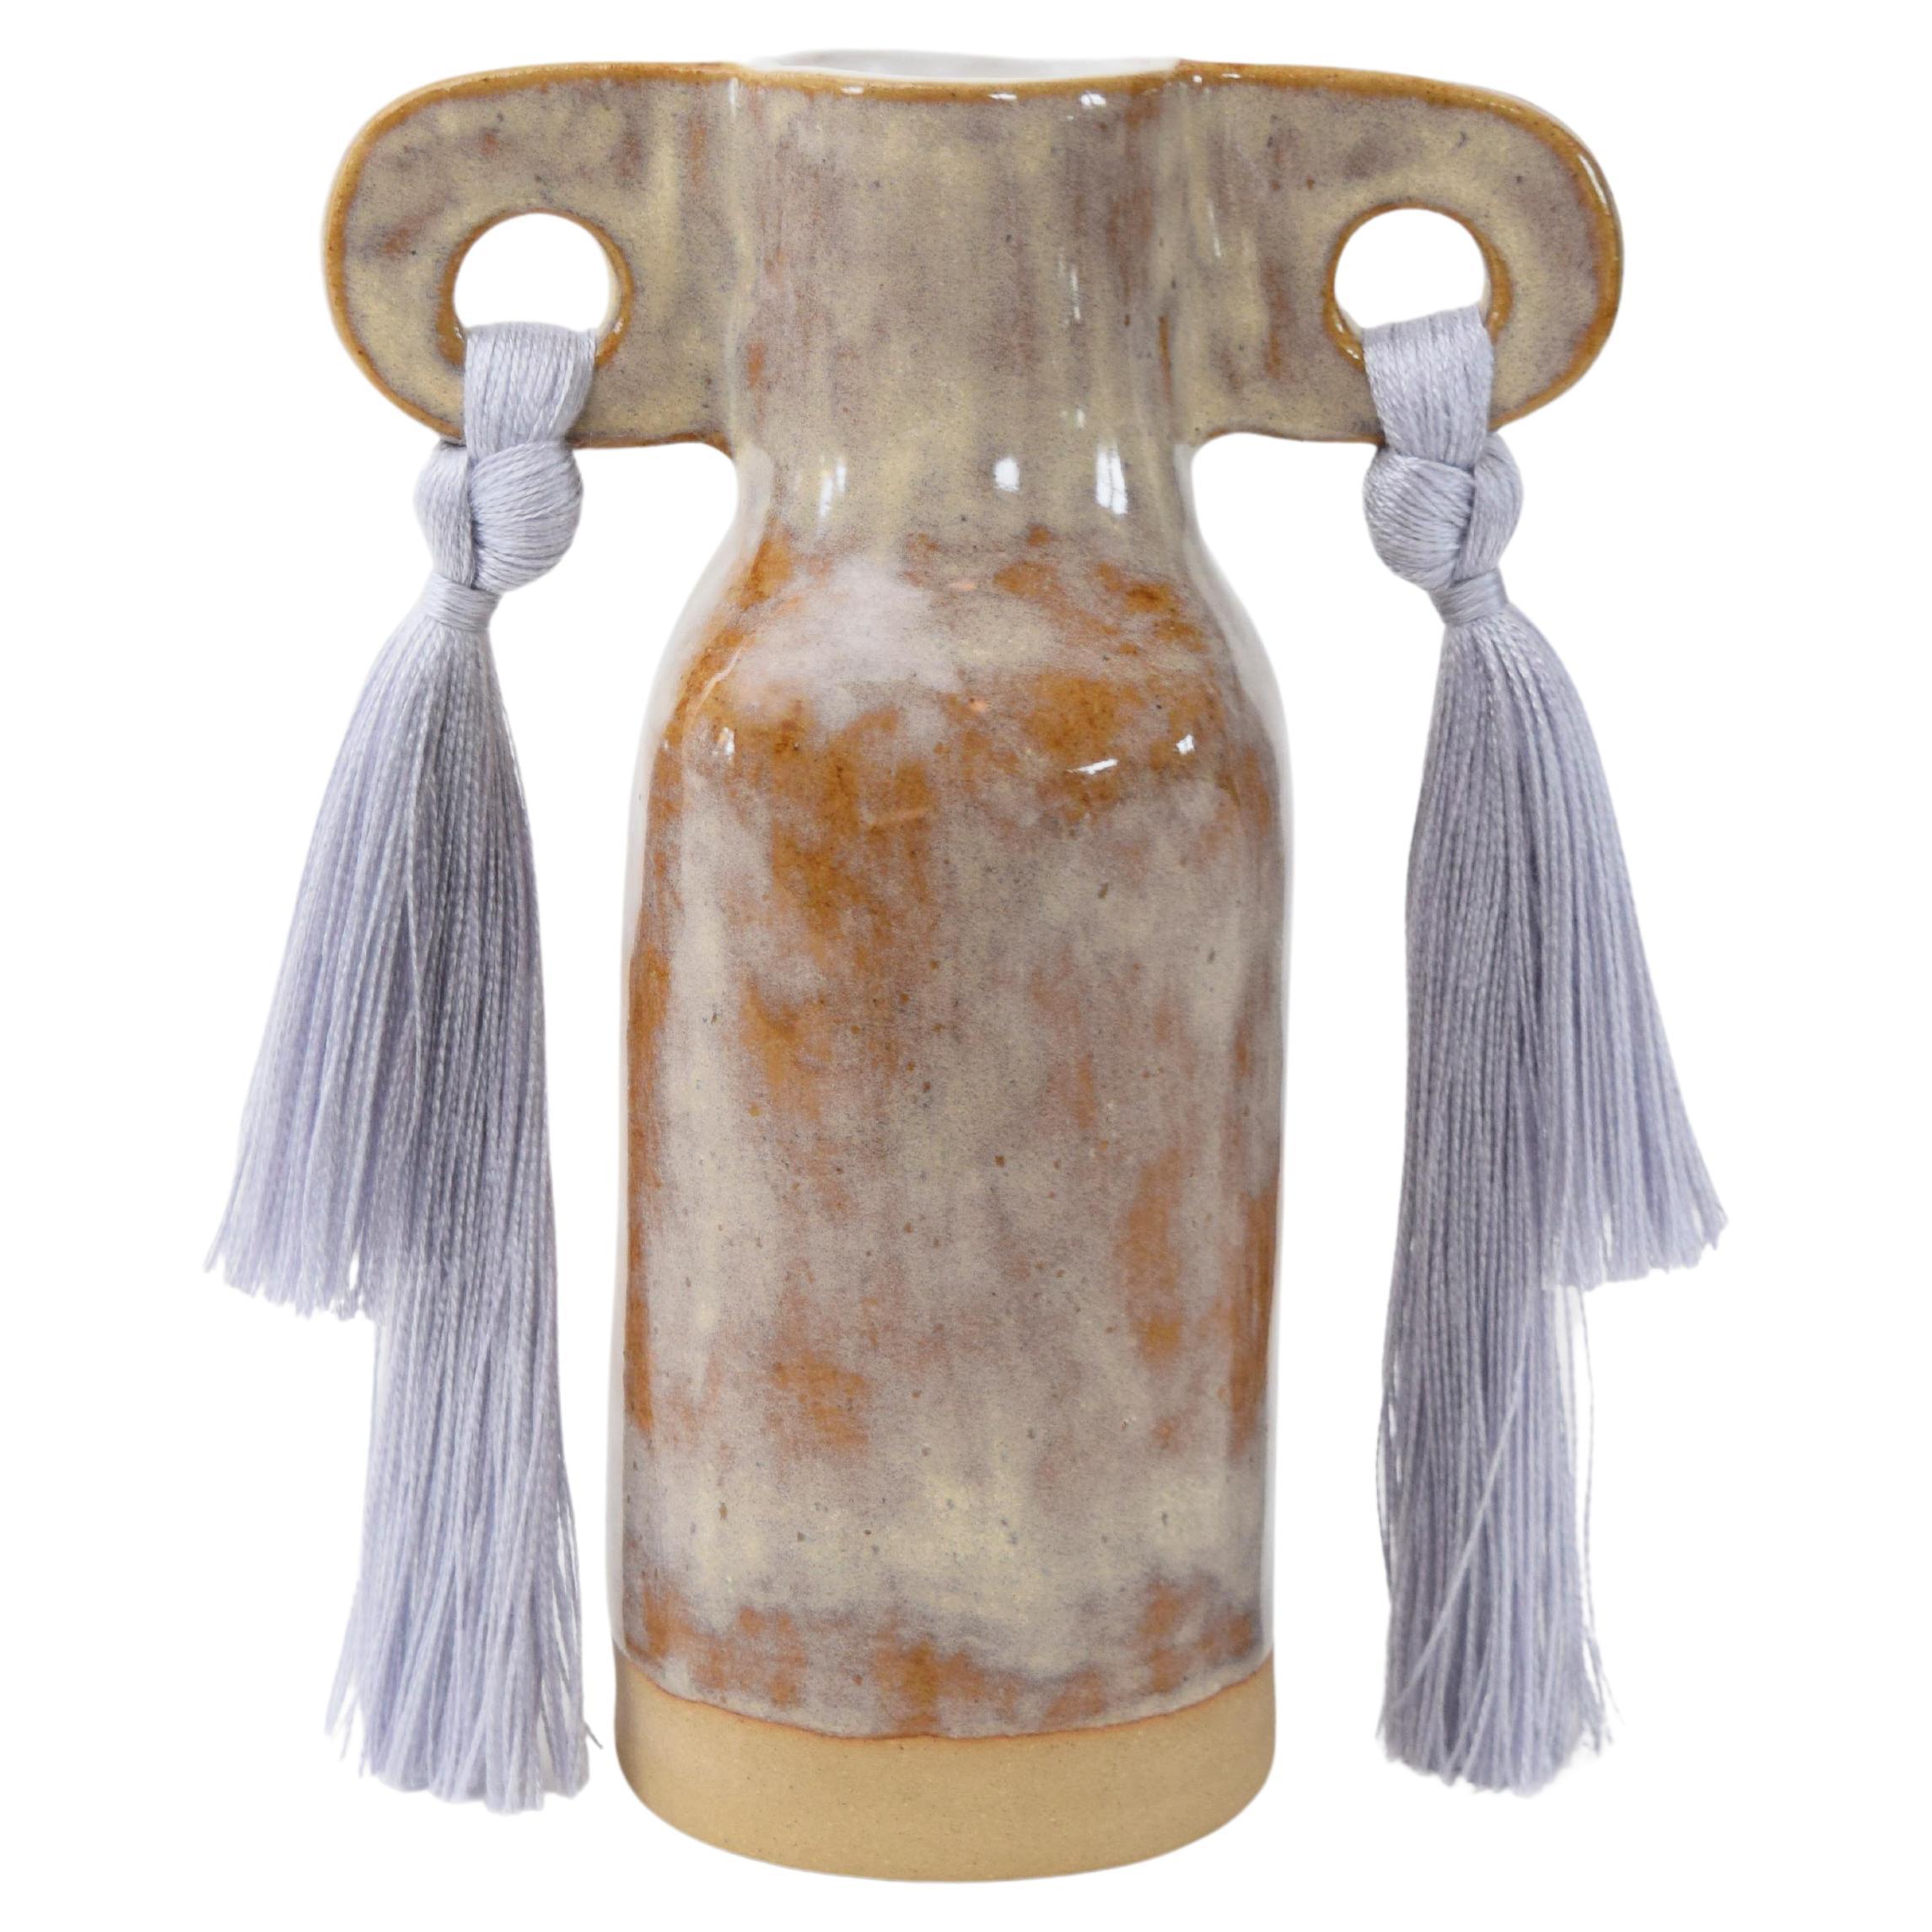 Handmade Ceramic Vase #606 in Gray Glaze with Tencel Fringe Details For Sale